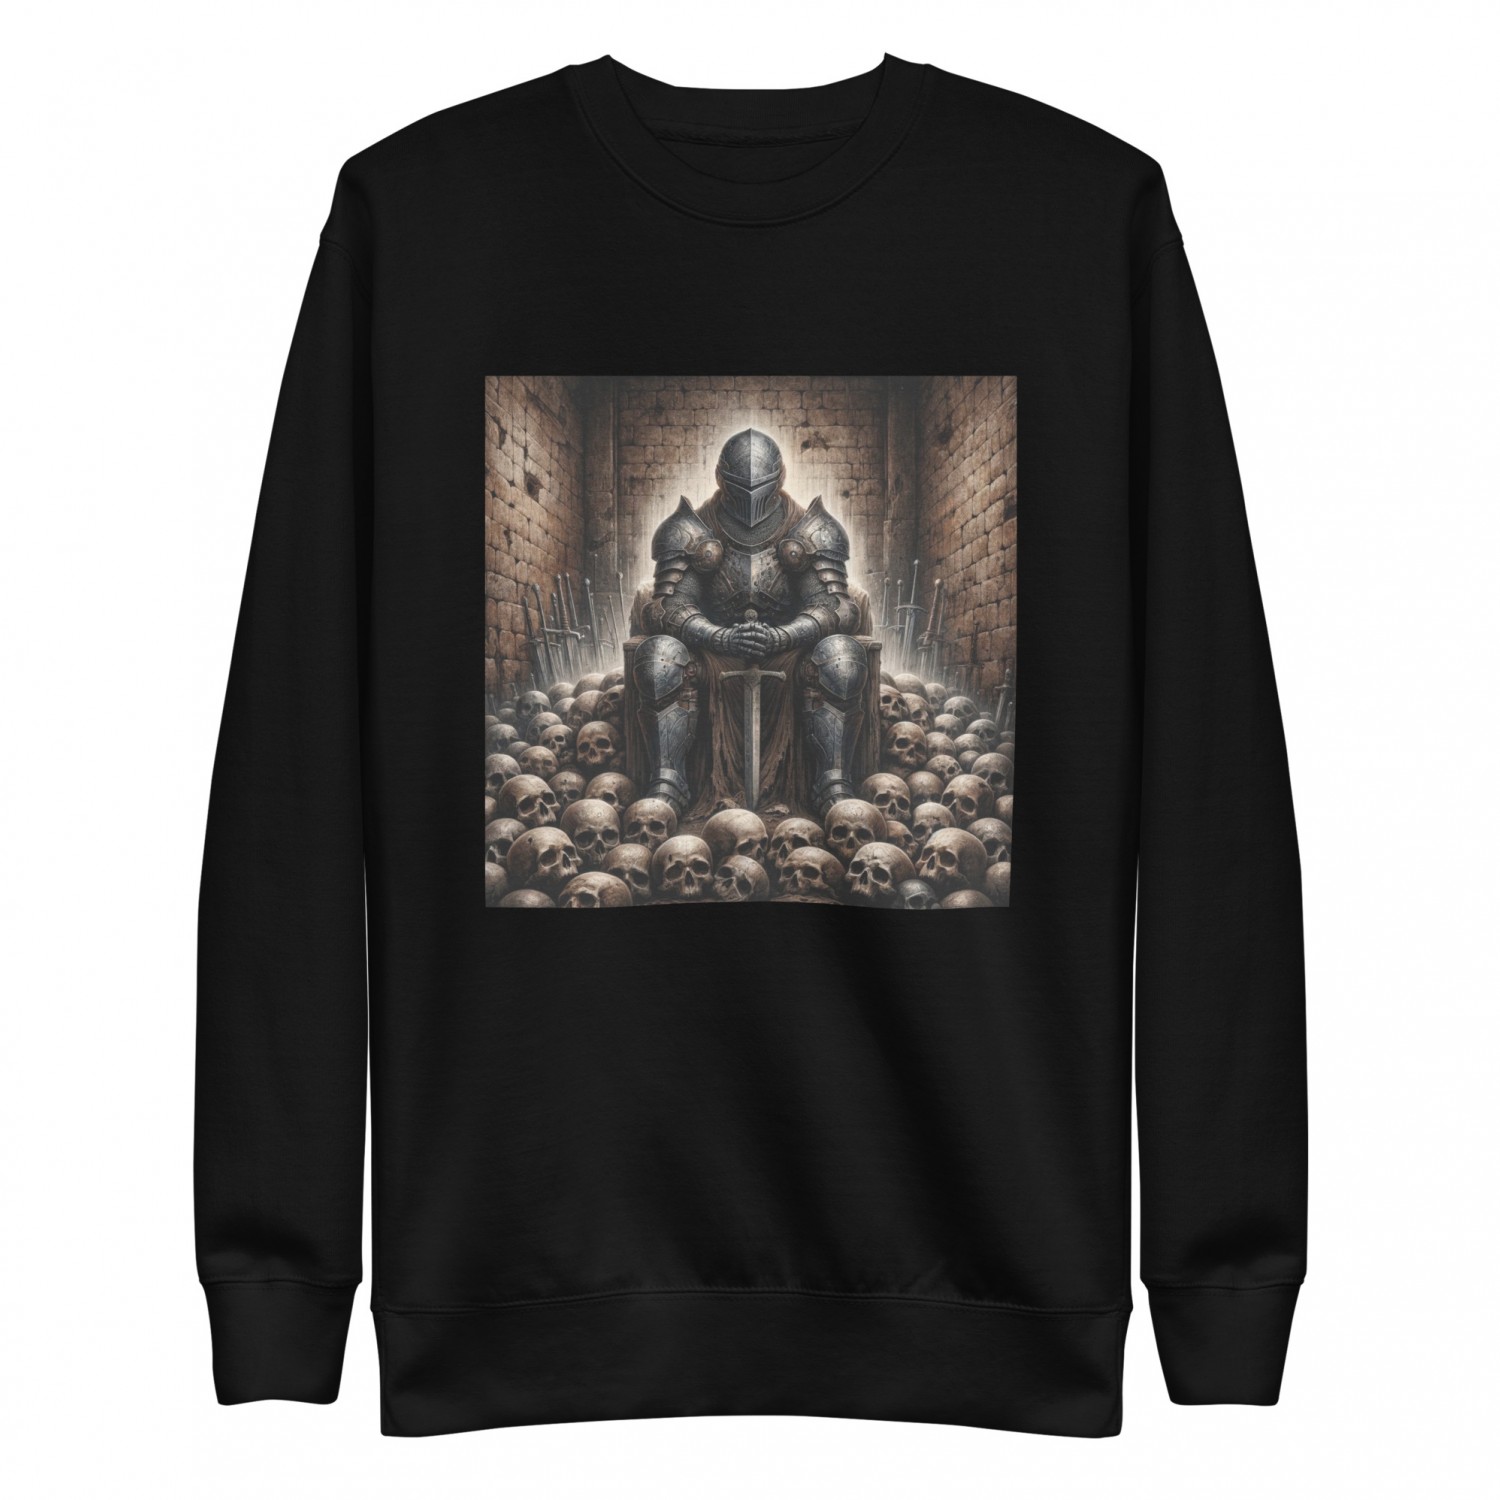 Buy a warm sweatshirt Knight of Camelot